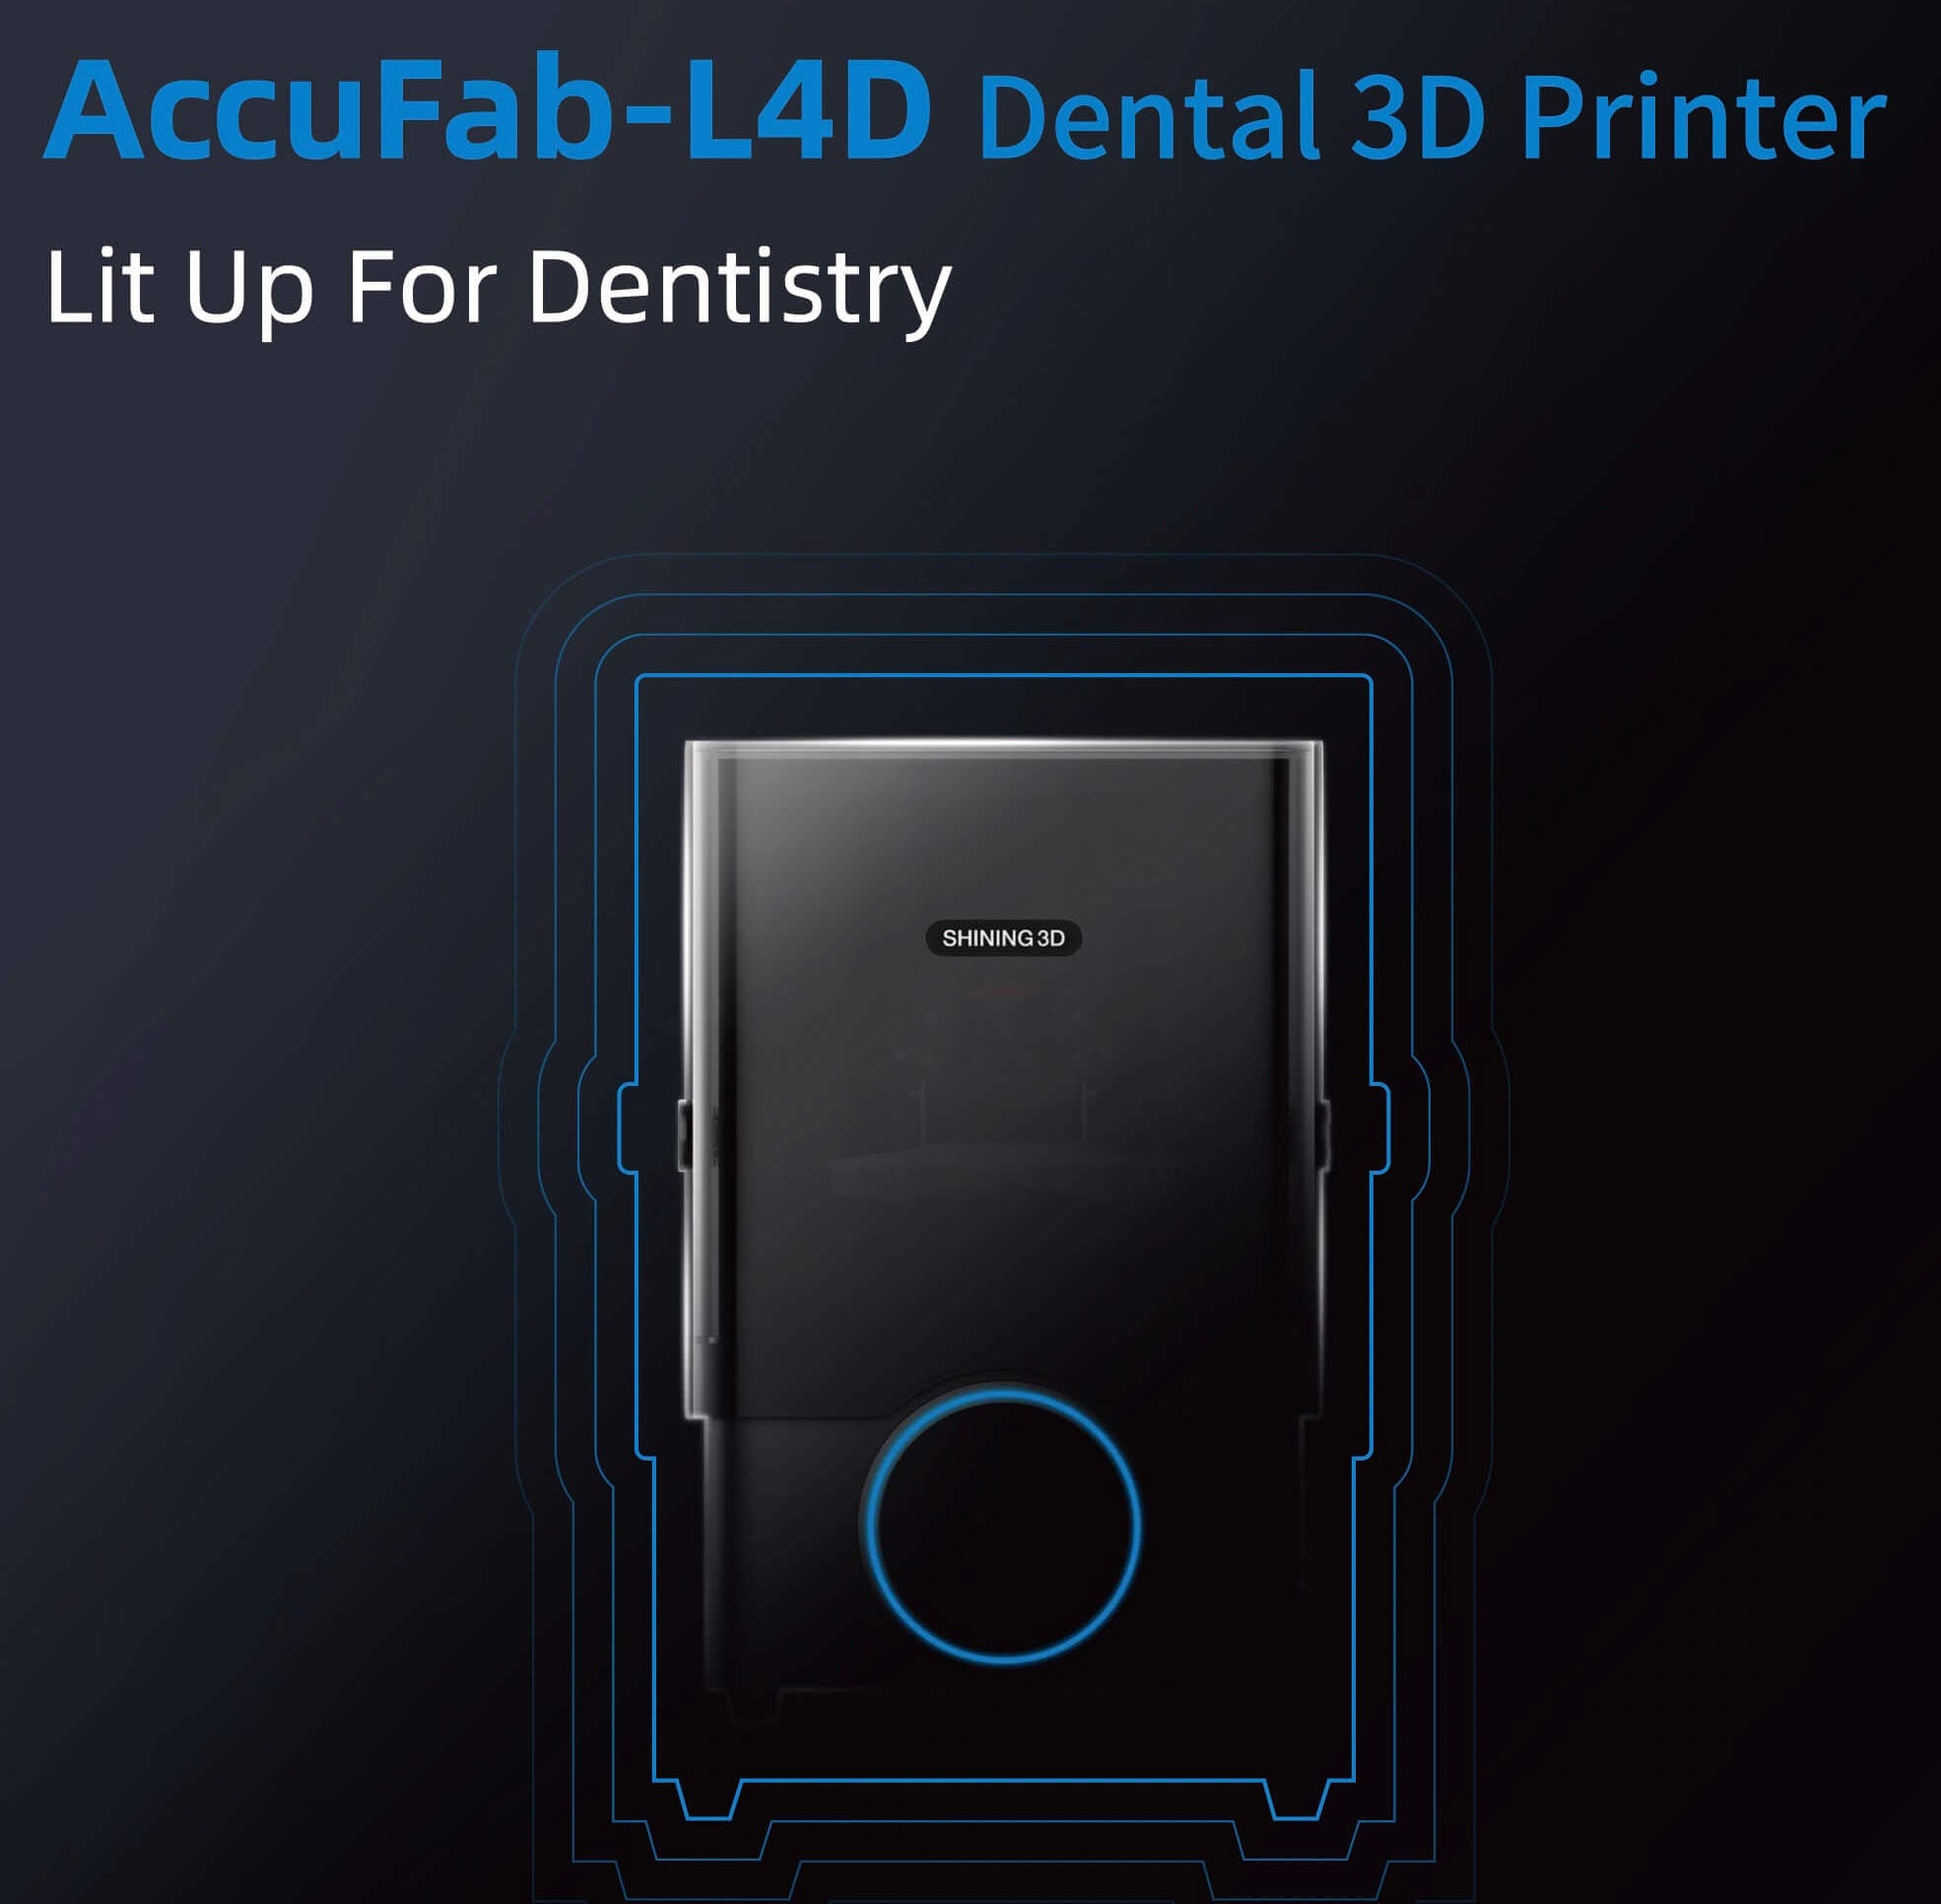 Shining 3D DS-EX Pro Dental 3D Scanner - ADAE Dental Online Store